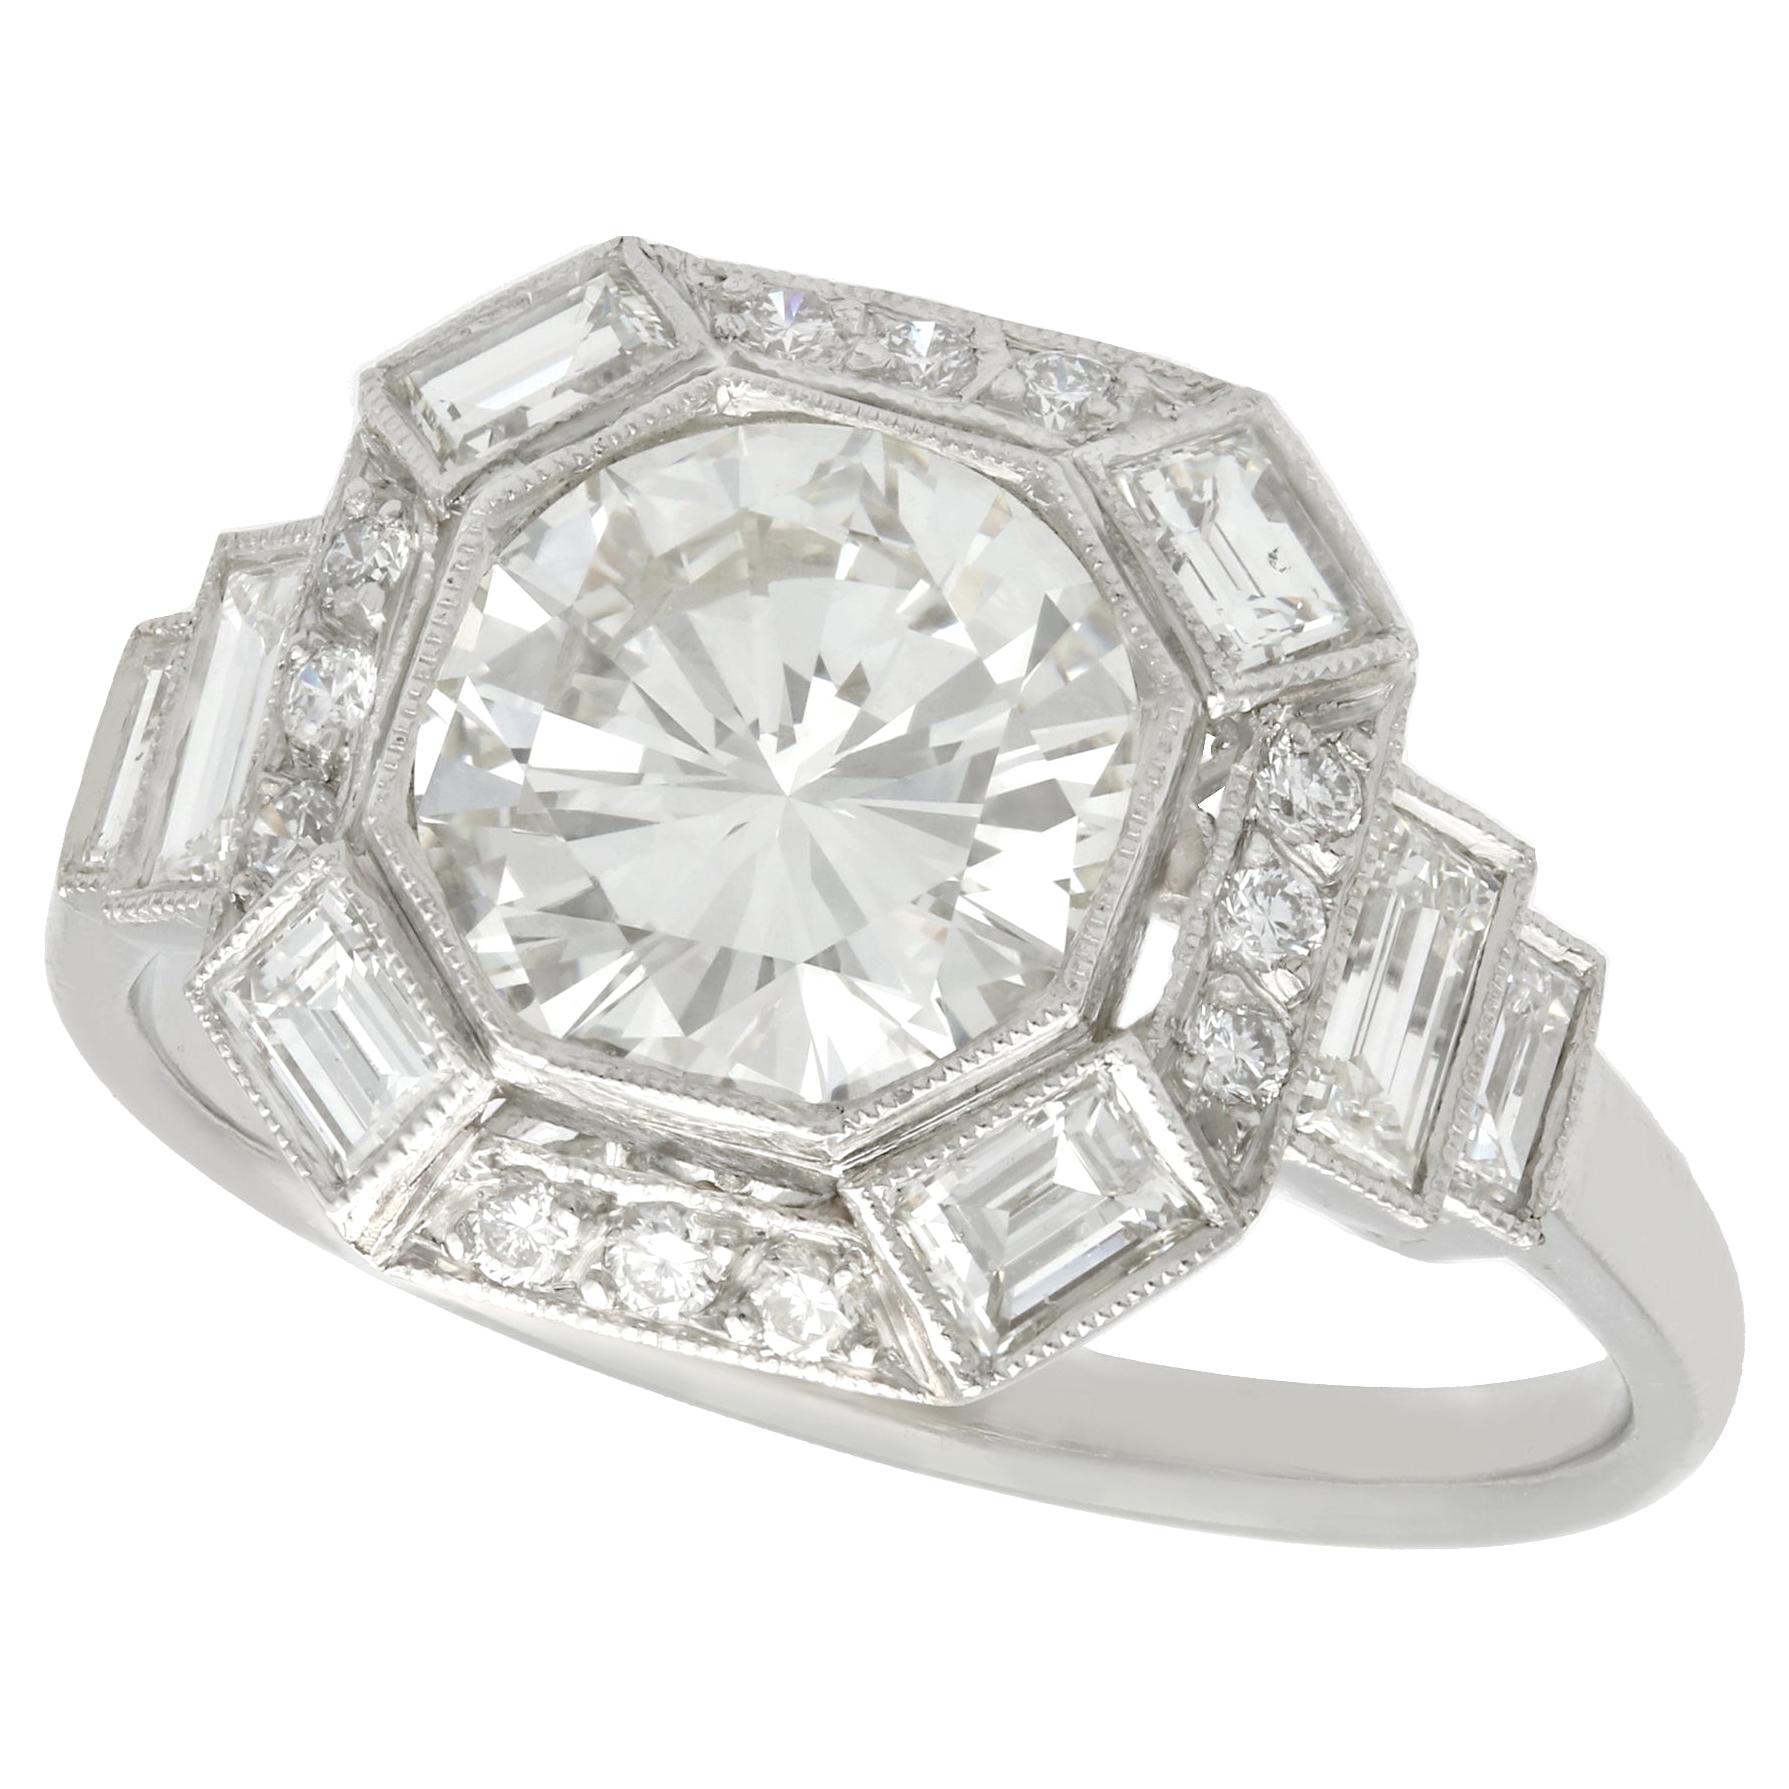 Art Deco Style 2.58 Carat Diamond and Platinum Engagement Ring